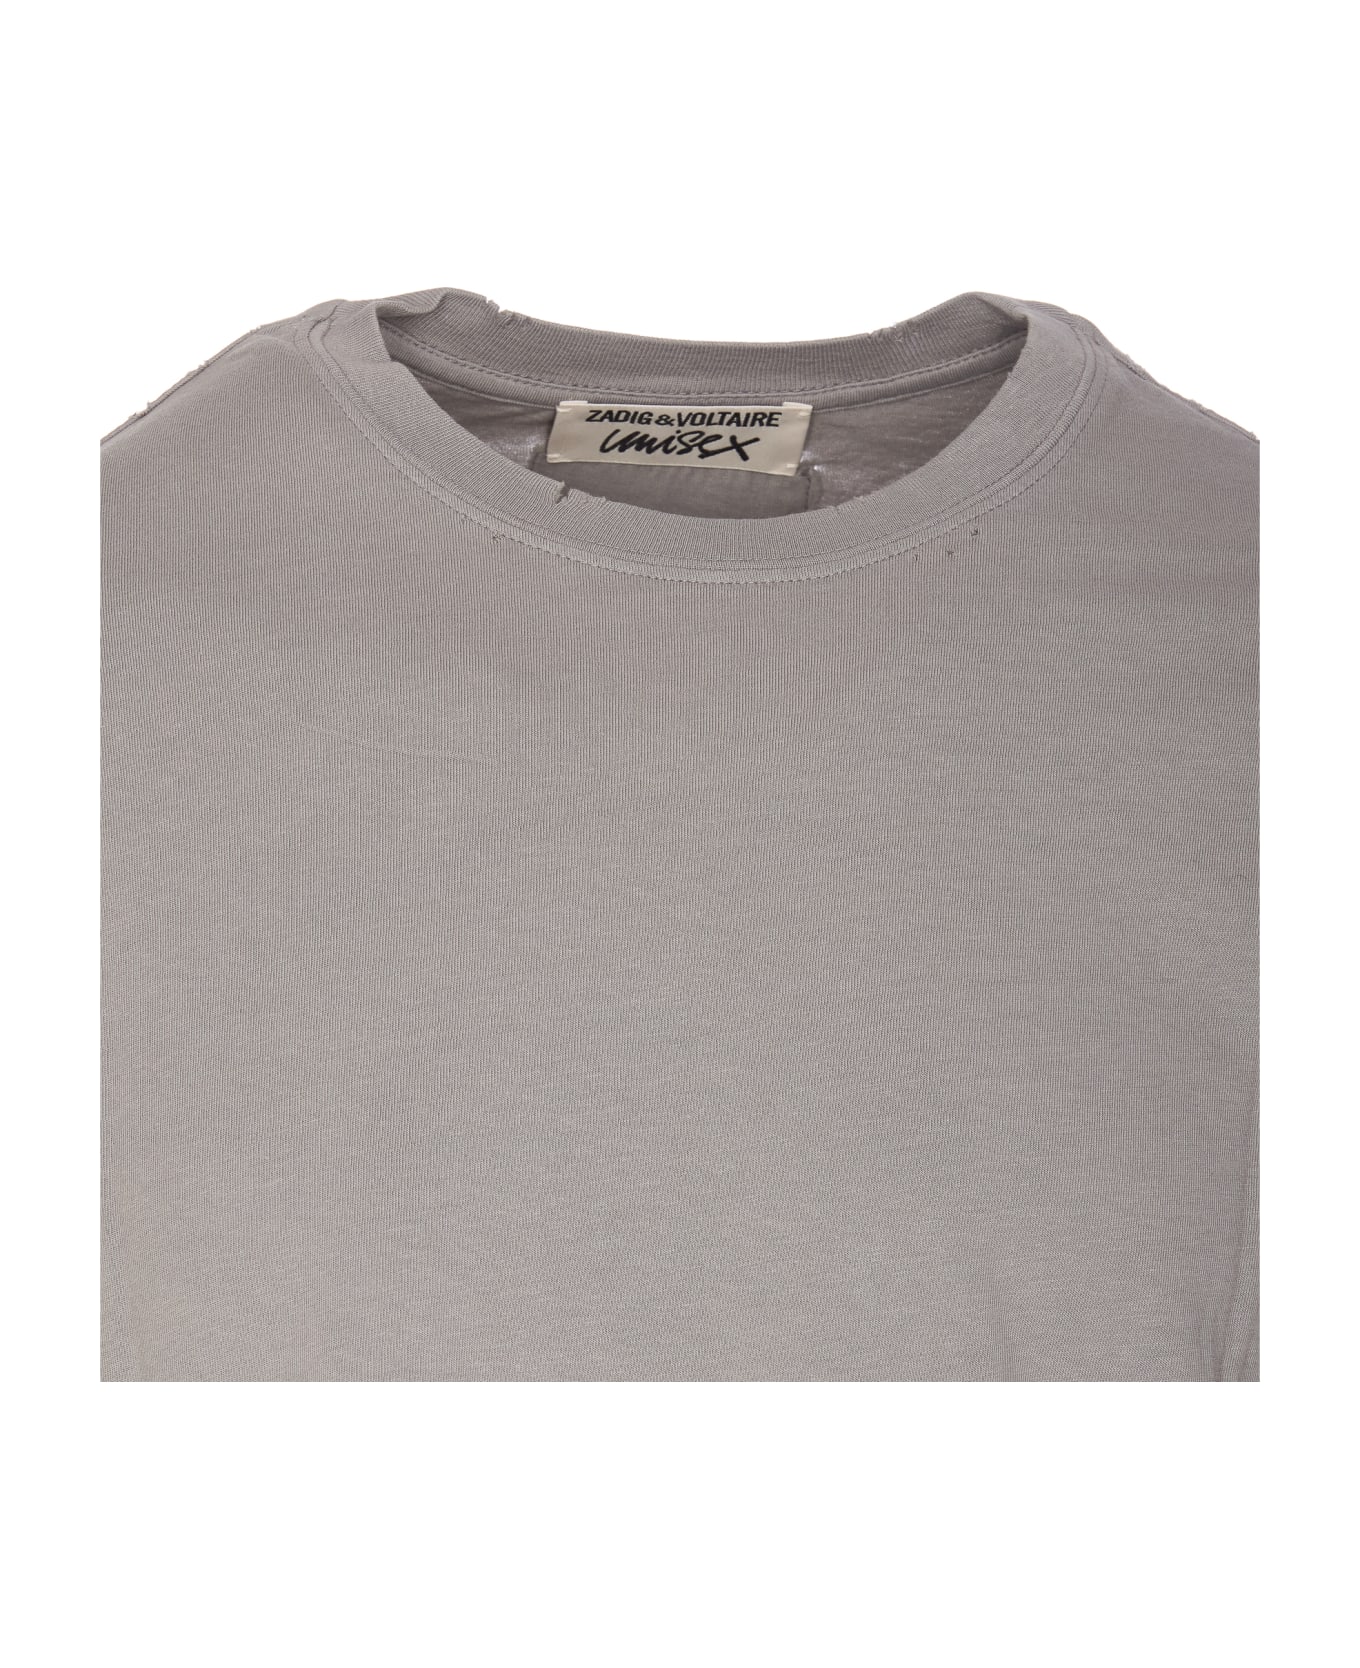 Zadig & Voltaire Jimmy Destroy T-shirt - Grey シャツ